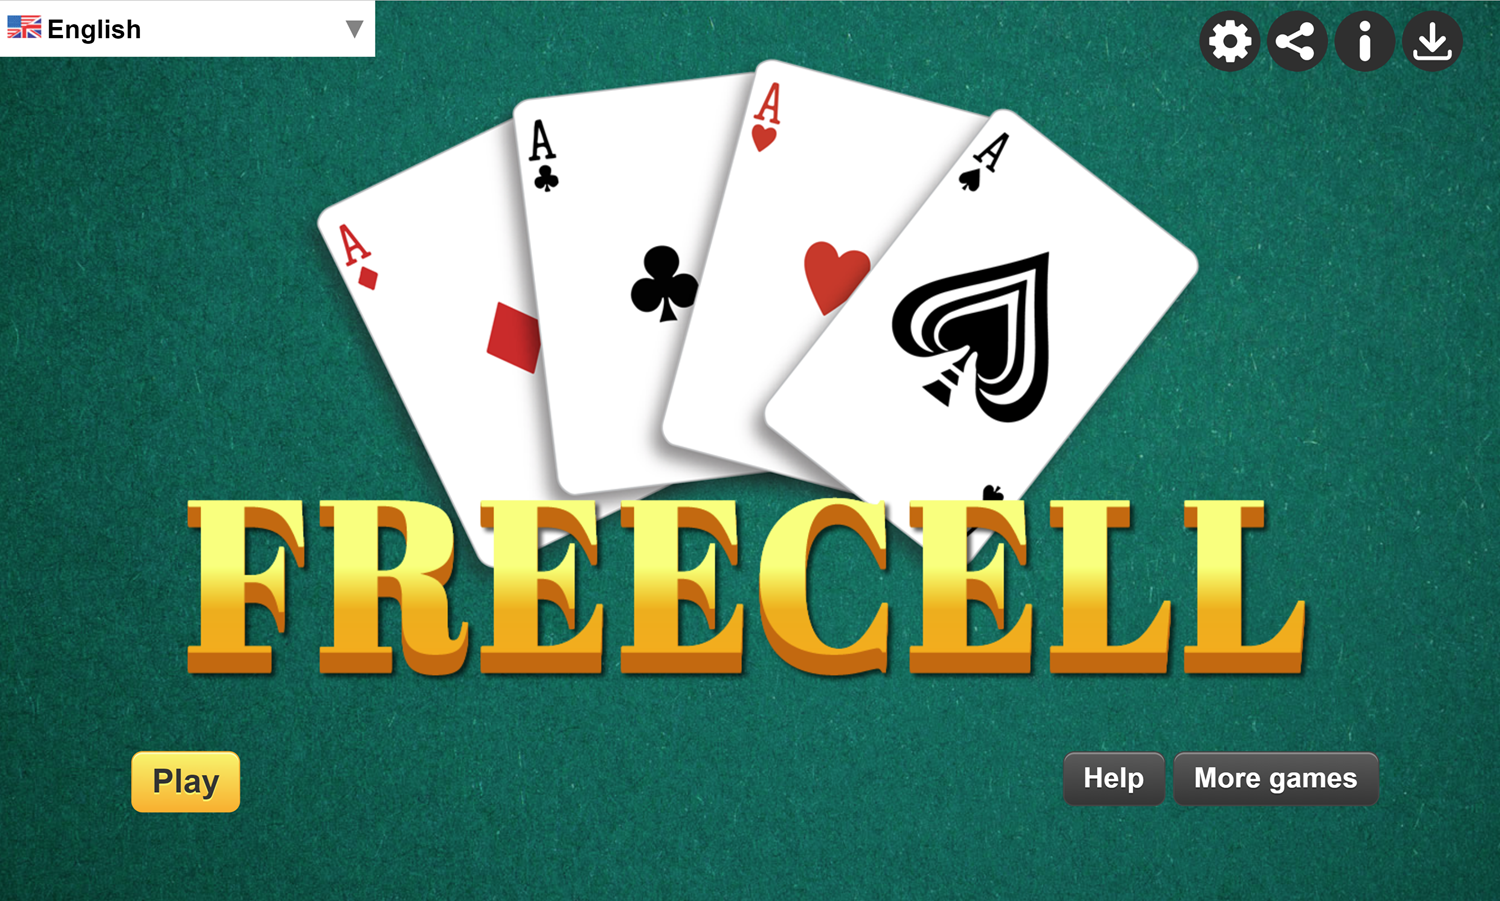 Freecell Game Welcome Screen Screenshot.